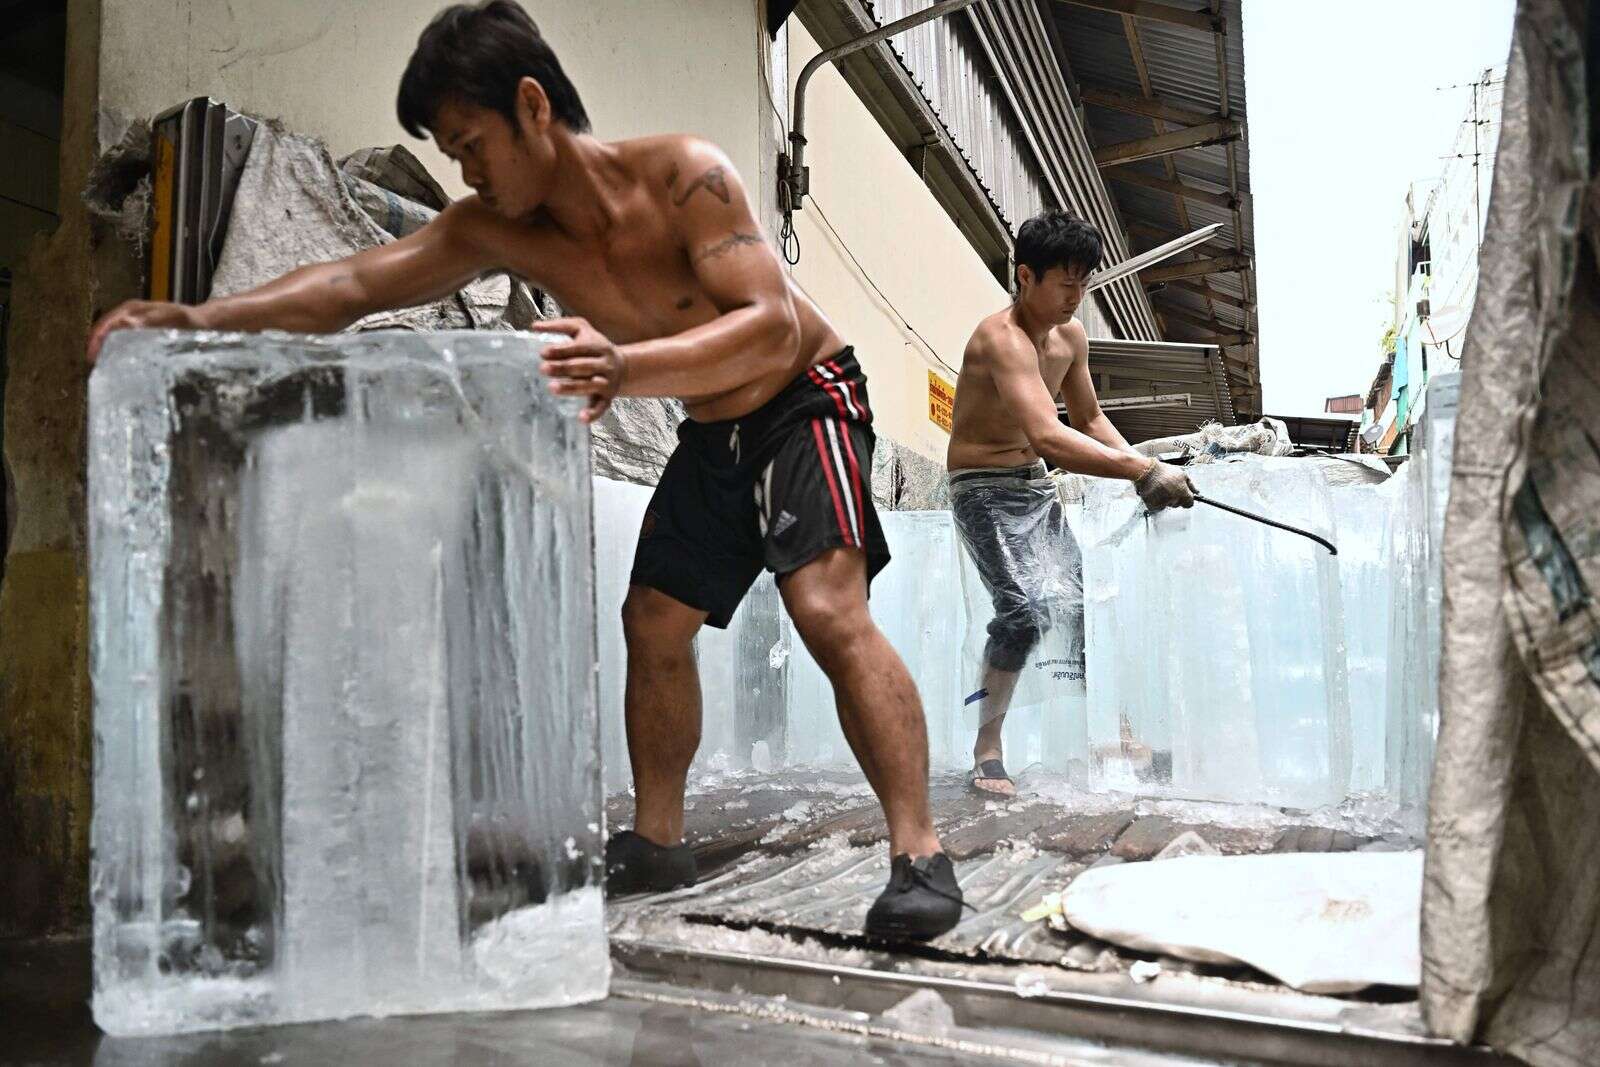 61 killed by heatstroke so far this year in thailand